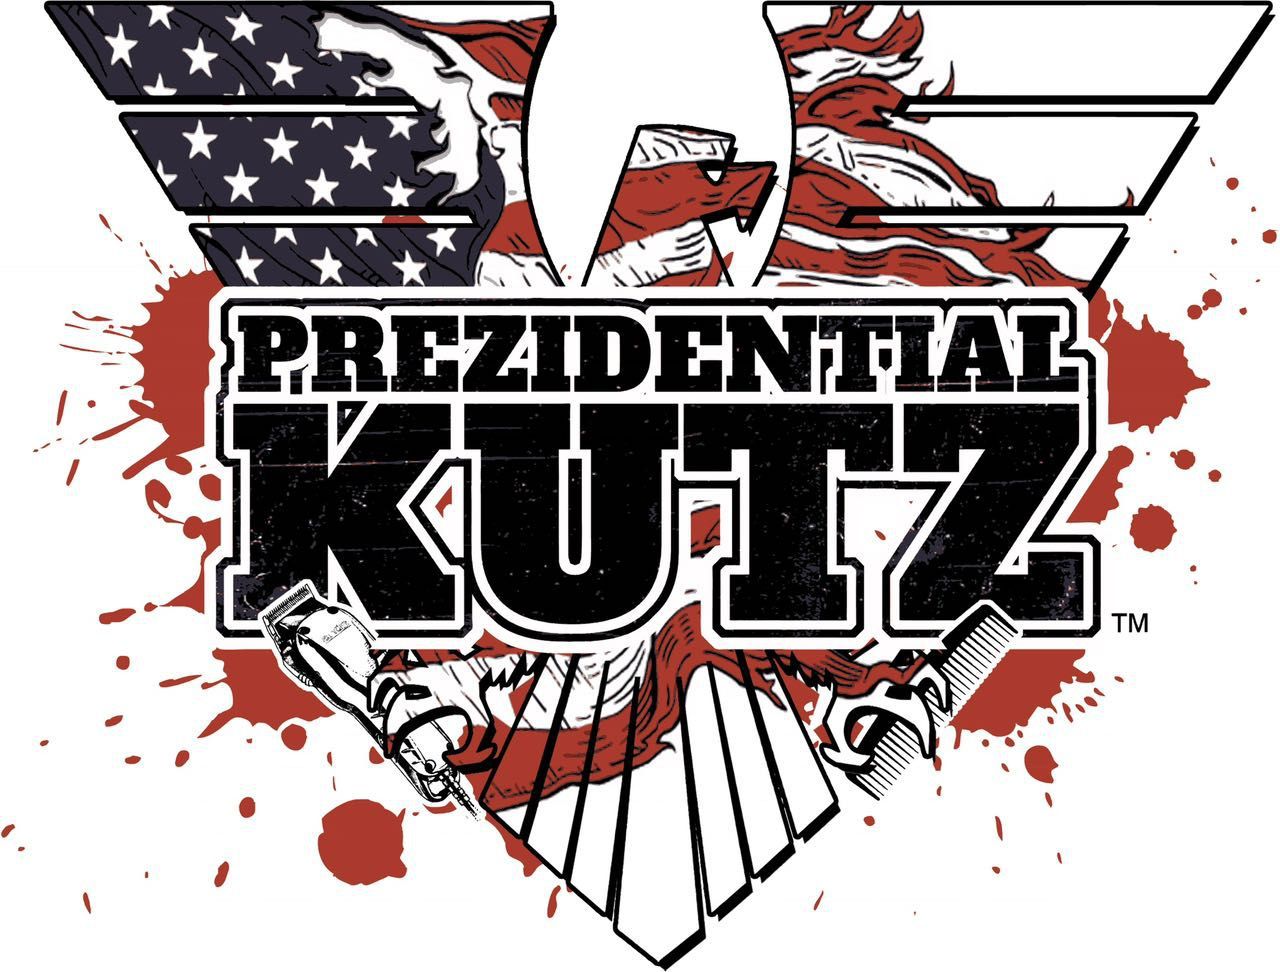 Lance Of Prezidential Kutz, W Congress St, G, Lafayette, 70506